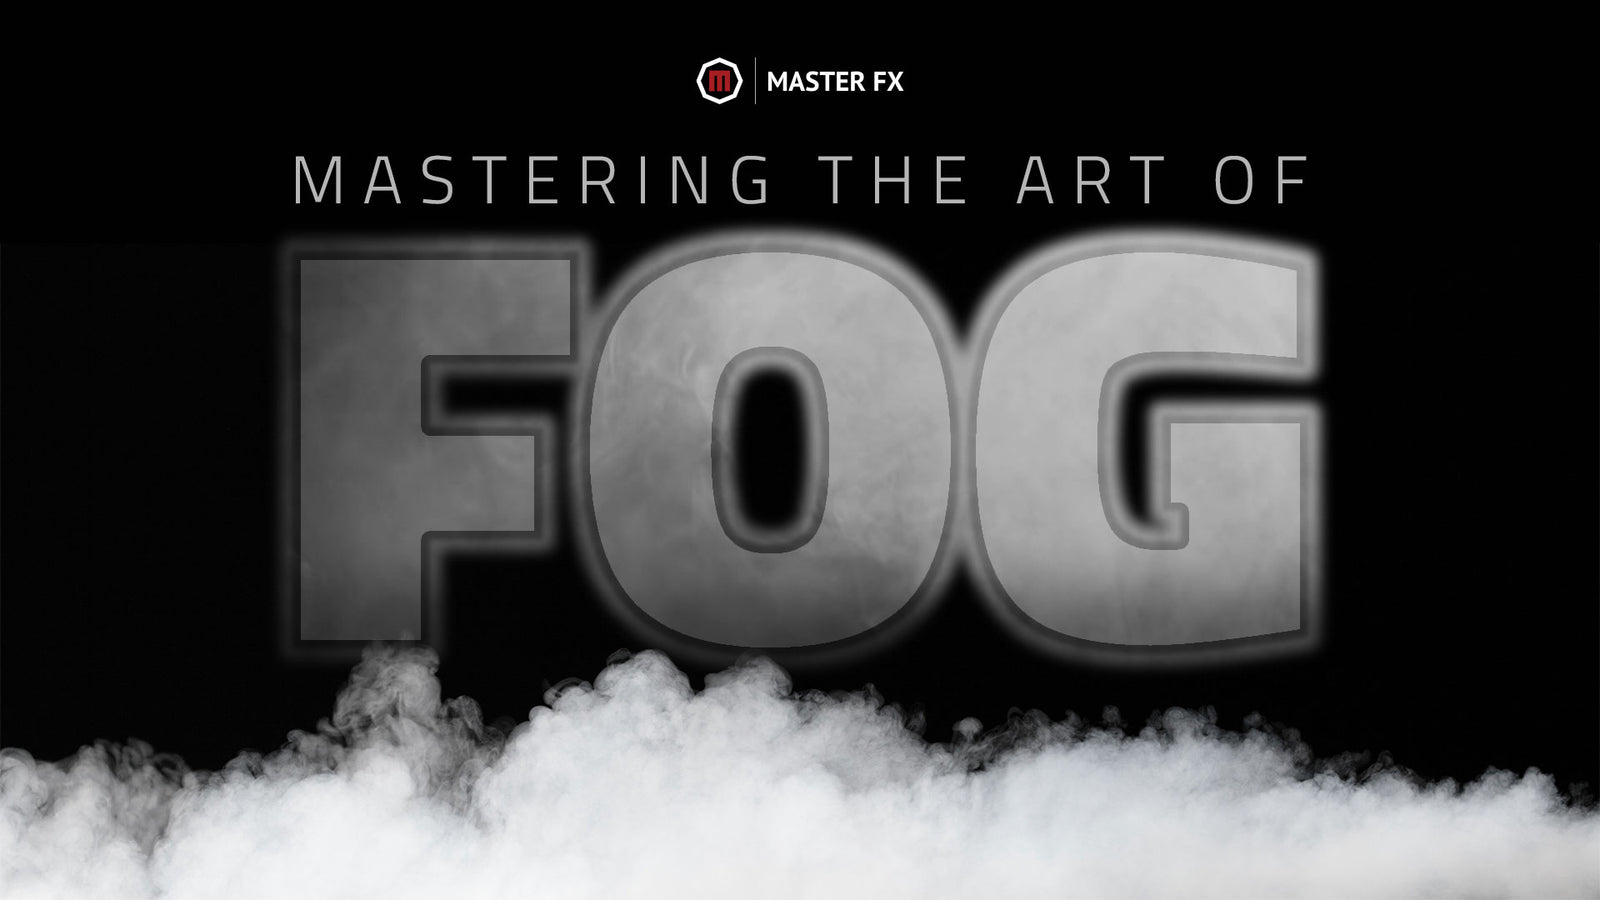 Mastering the Art or Fog